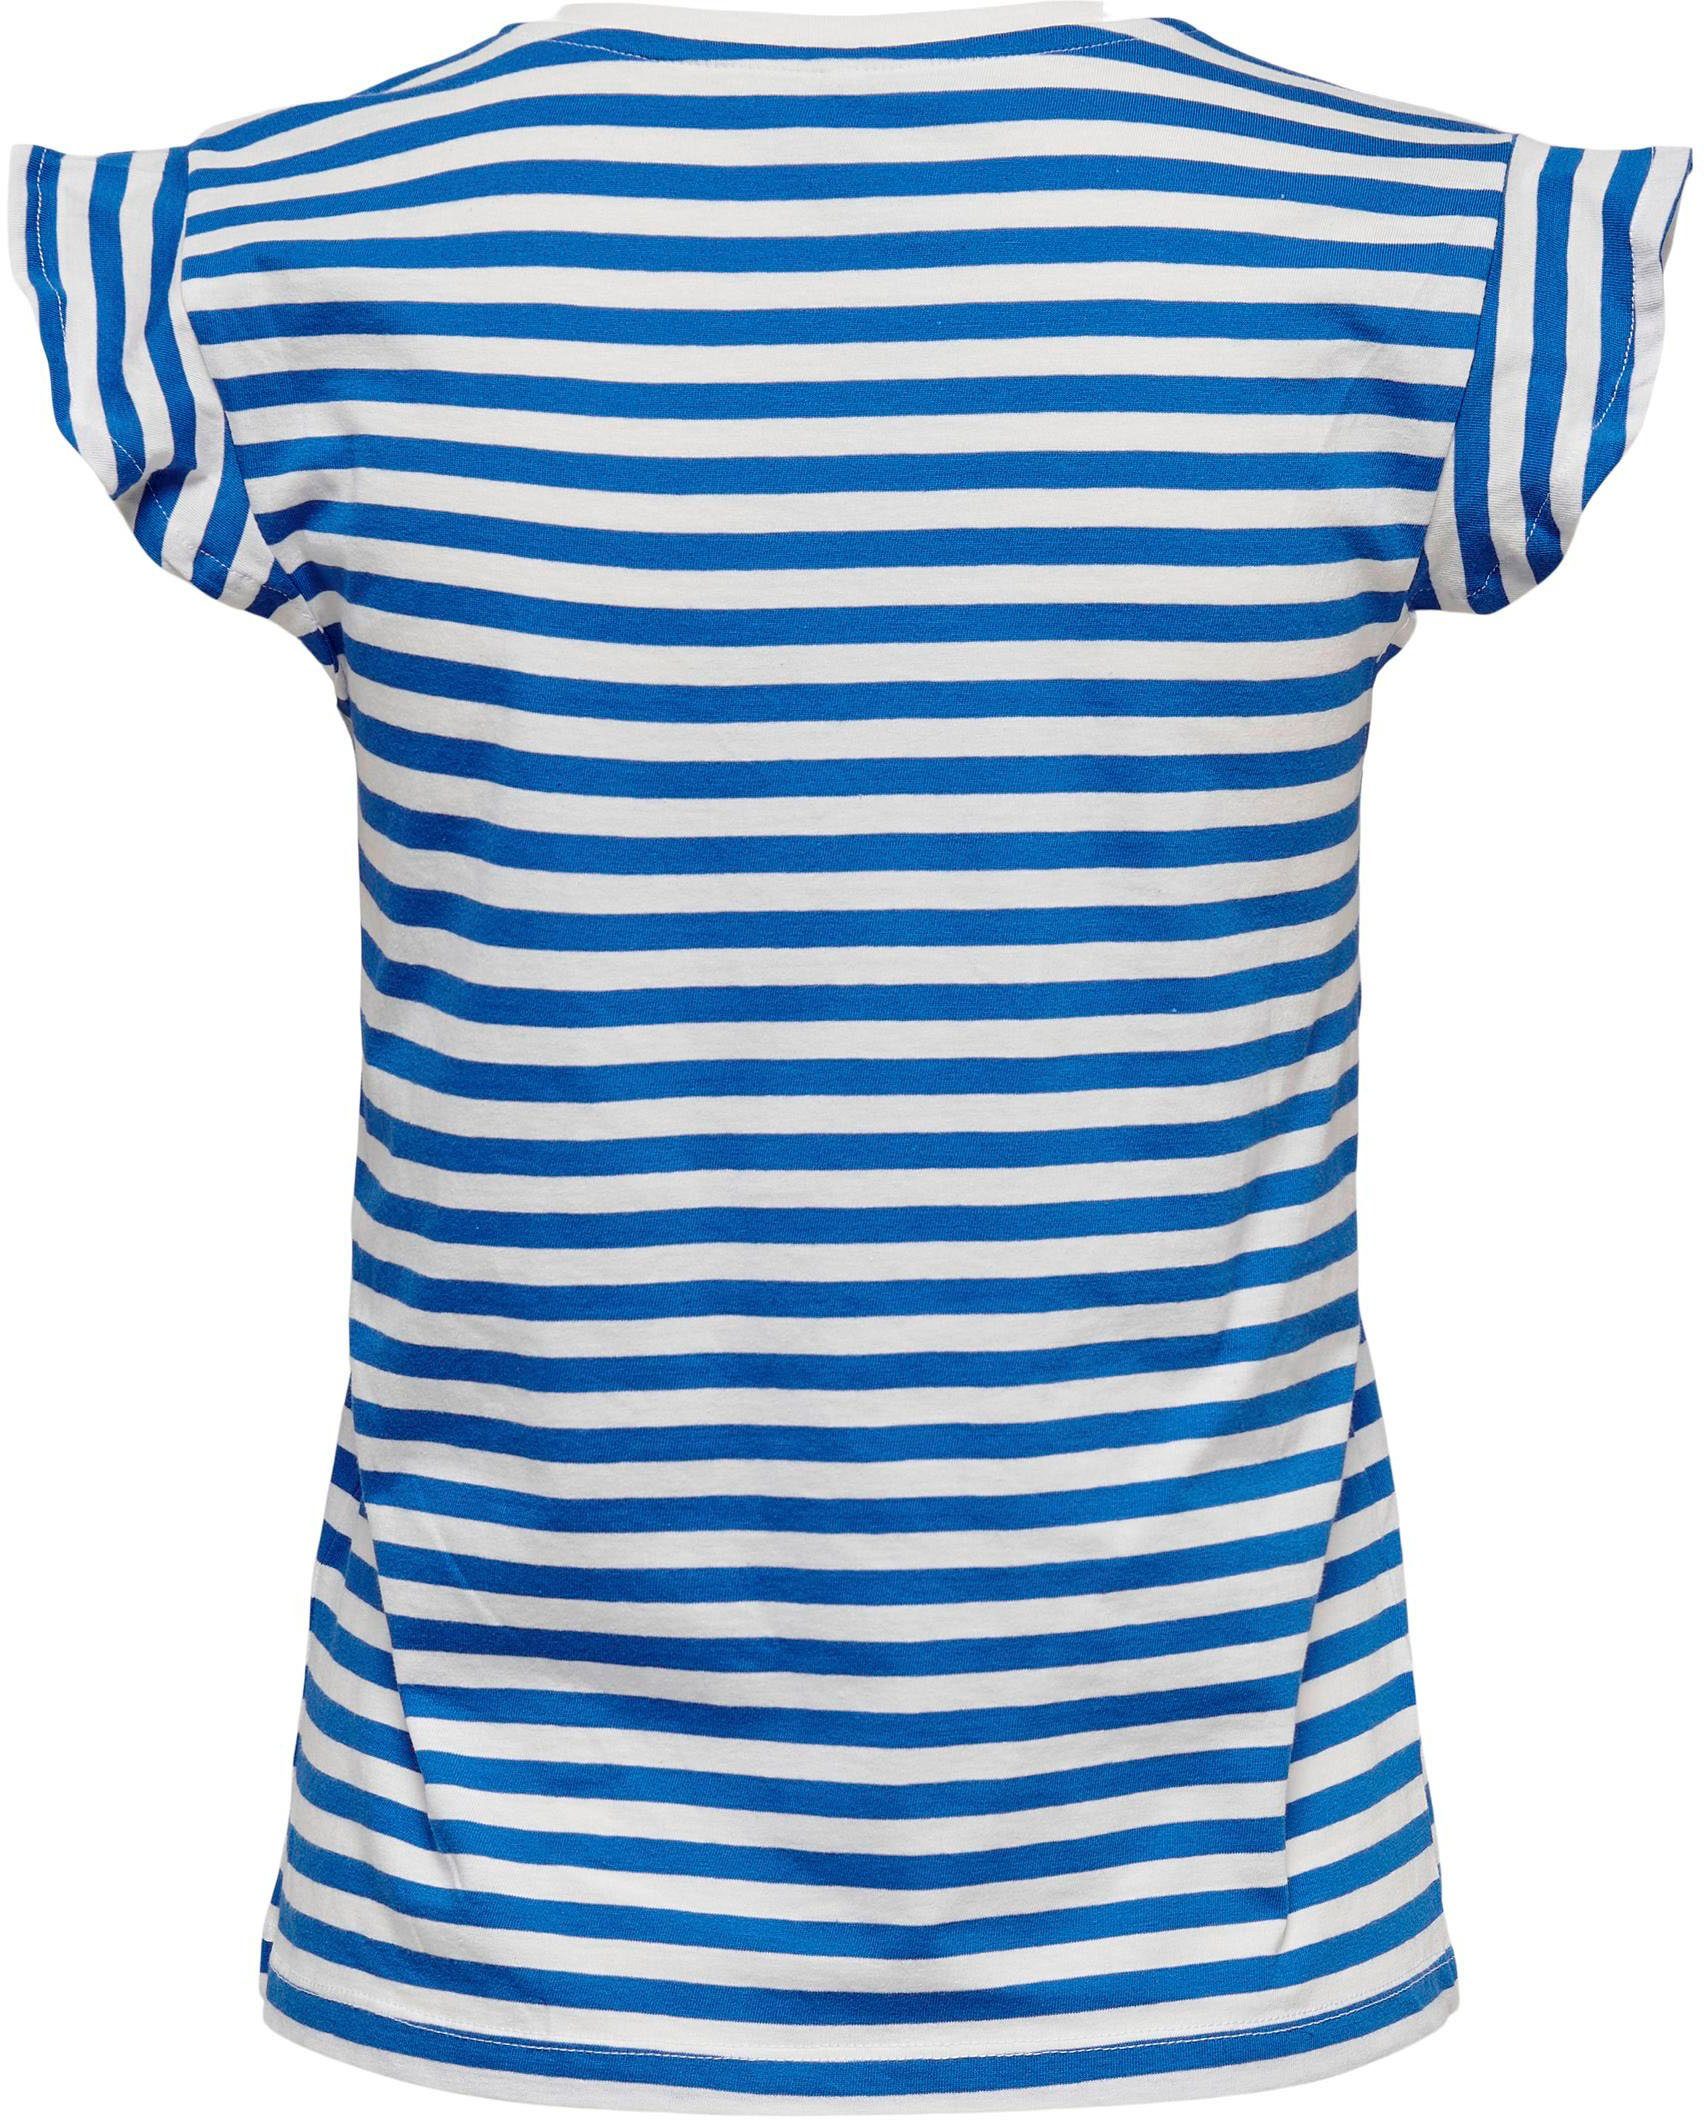 ONLY V-Shirt ONLMAY S/S FRILL Blue dancer Stripes:Cloud V-NECK Strong TOP